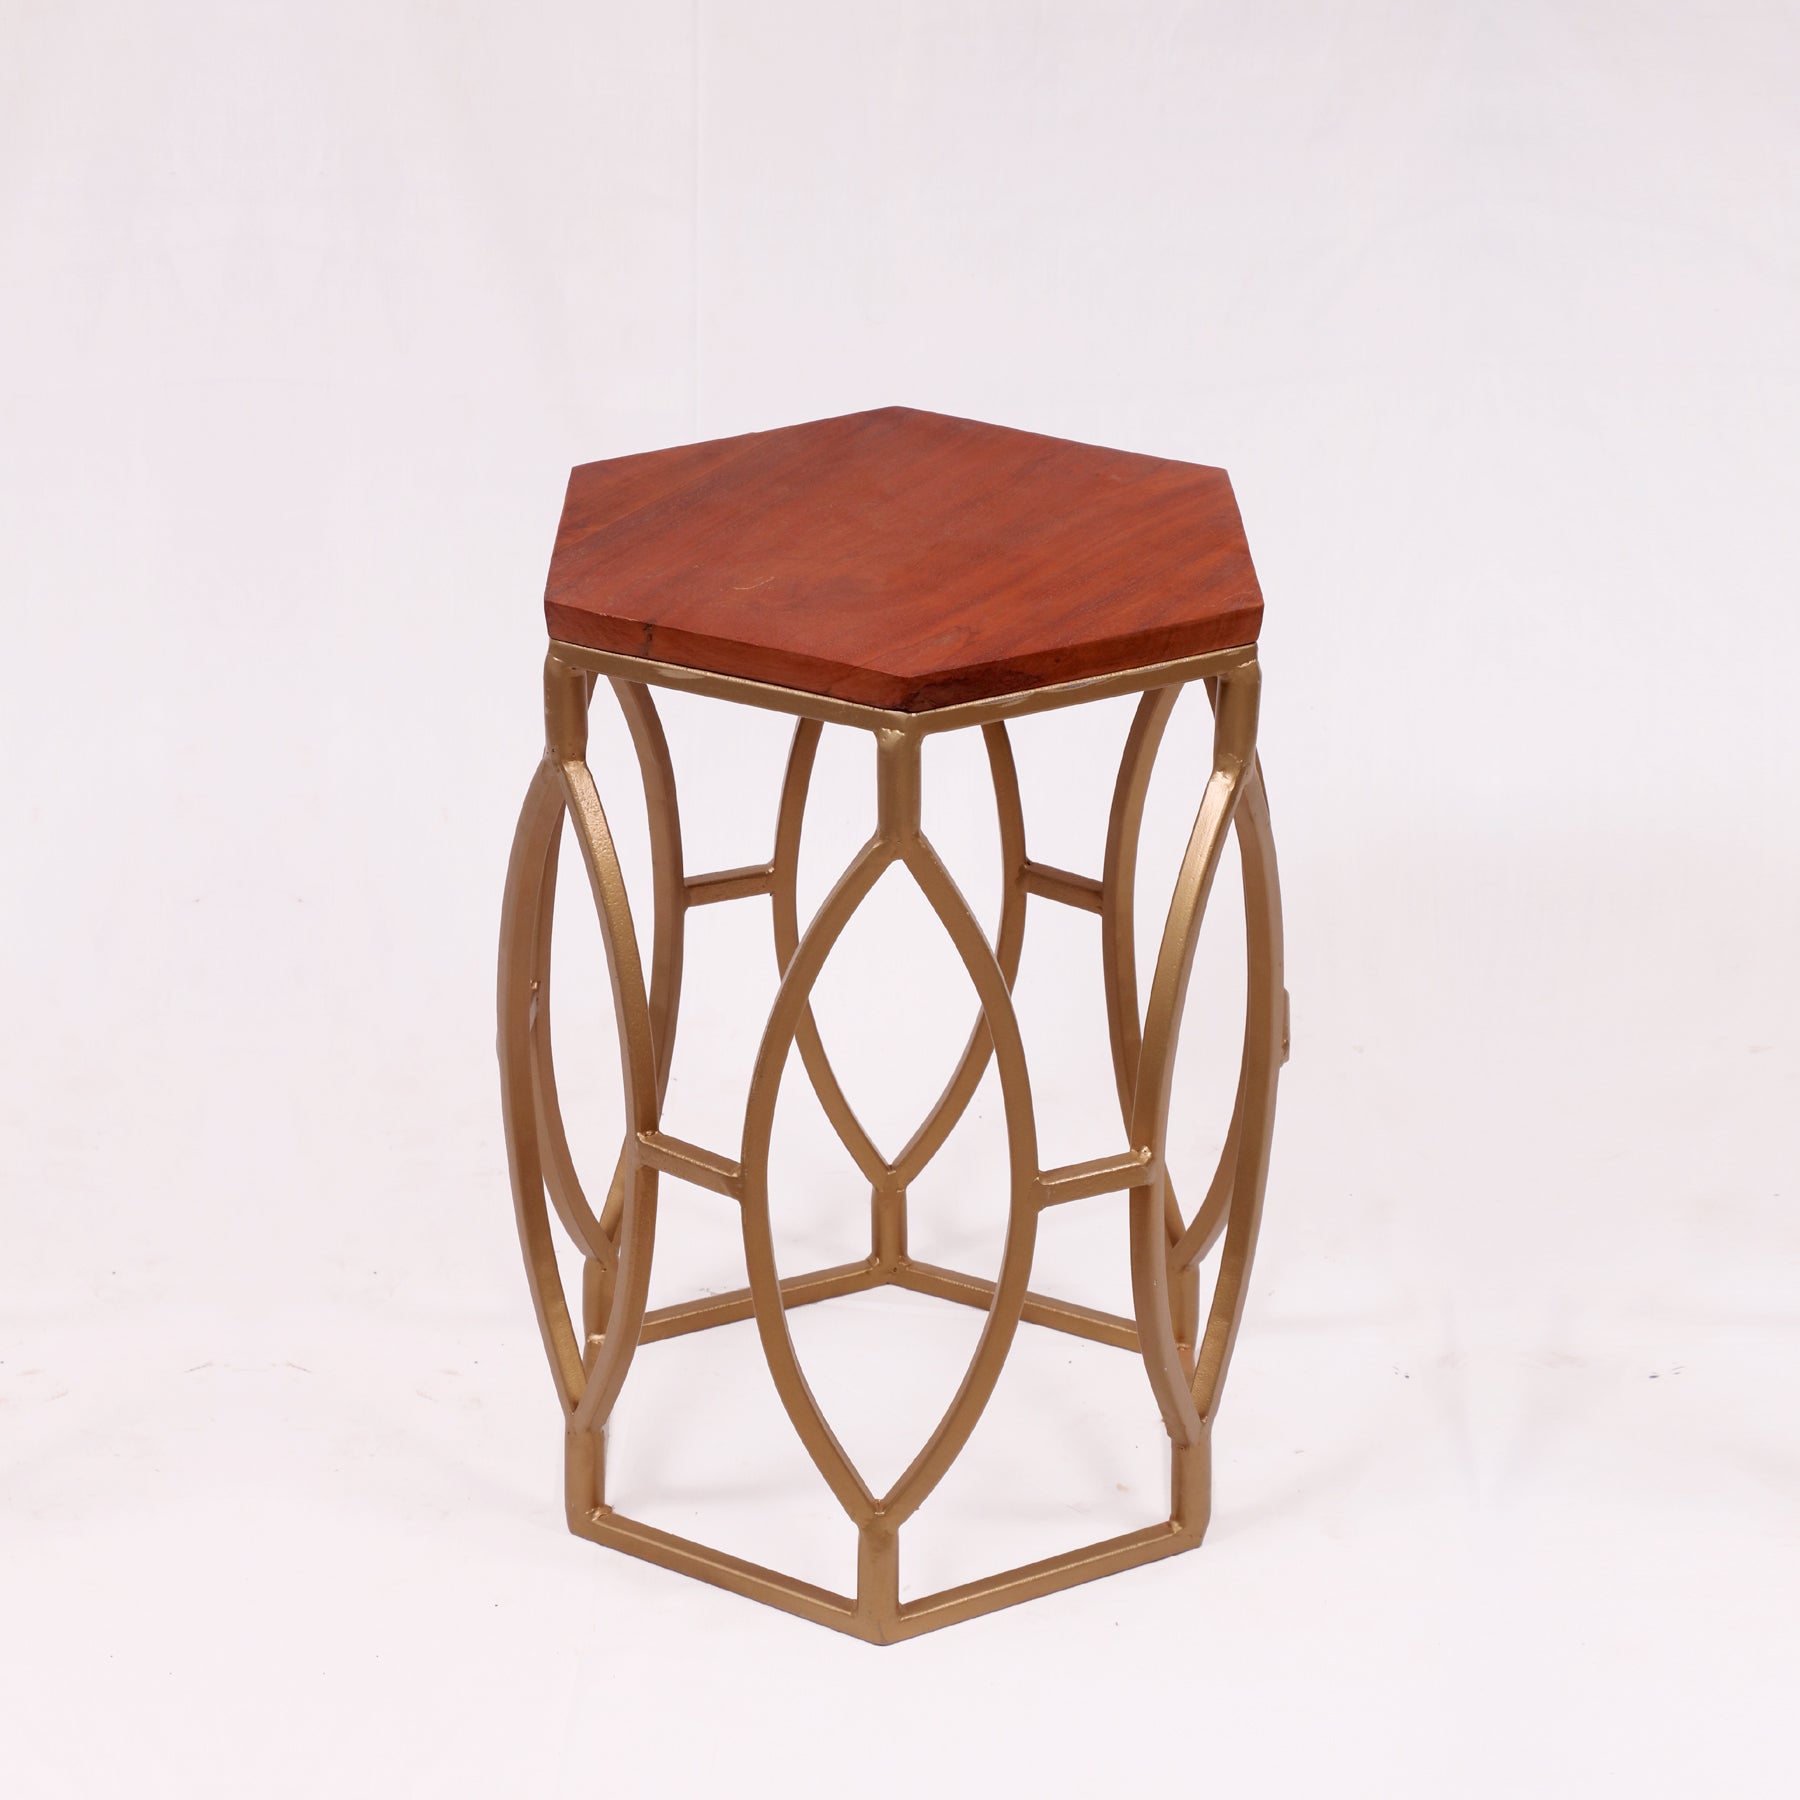 Hexagonal Metallic Coffee Table End Table